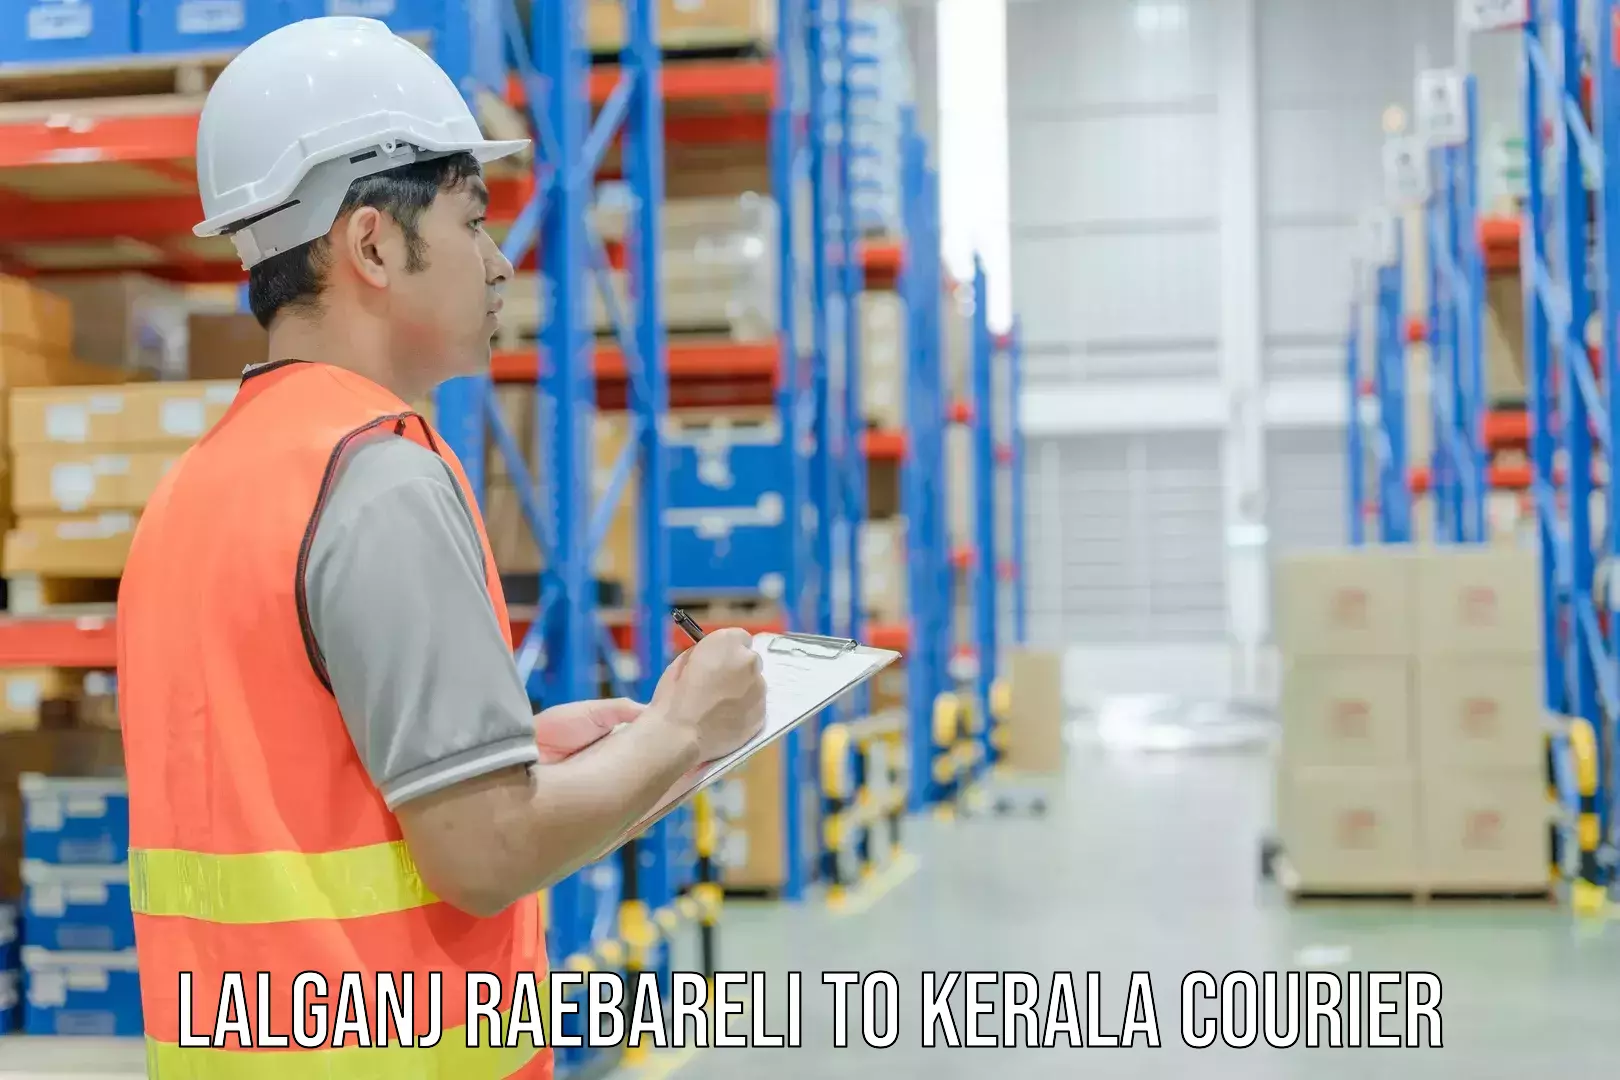 Reliable delivery network Lalganj Raebareli to Kozhikode